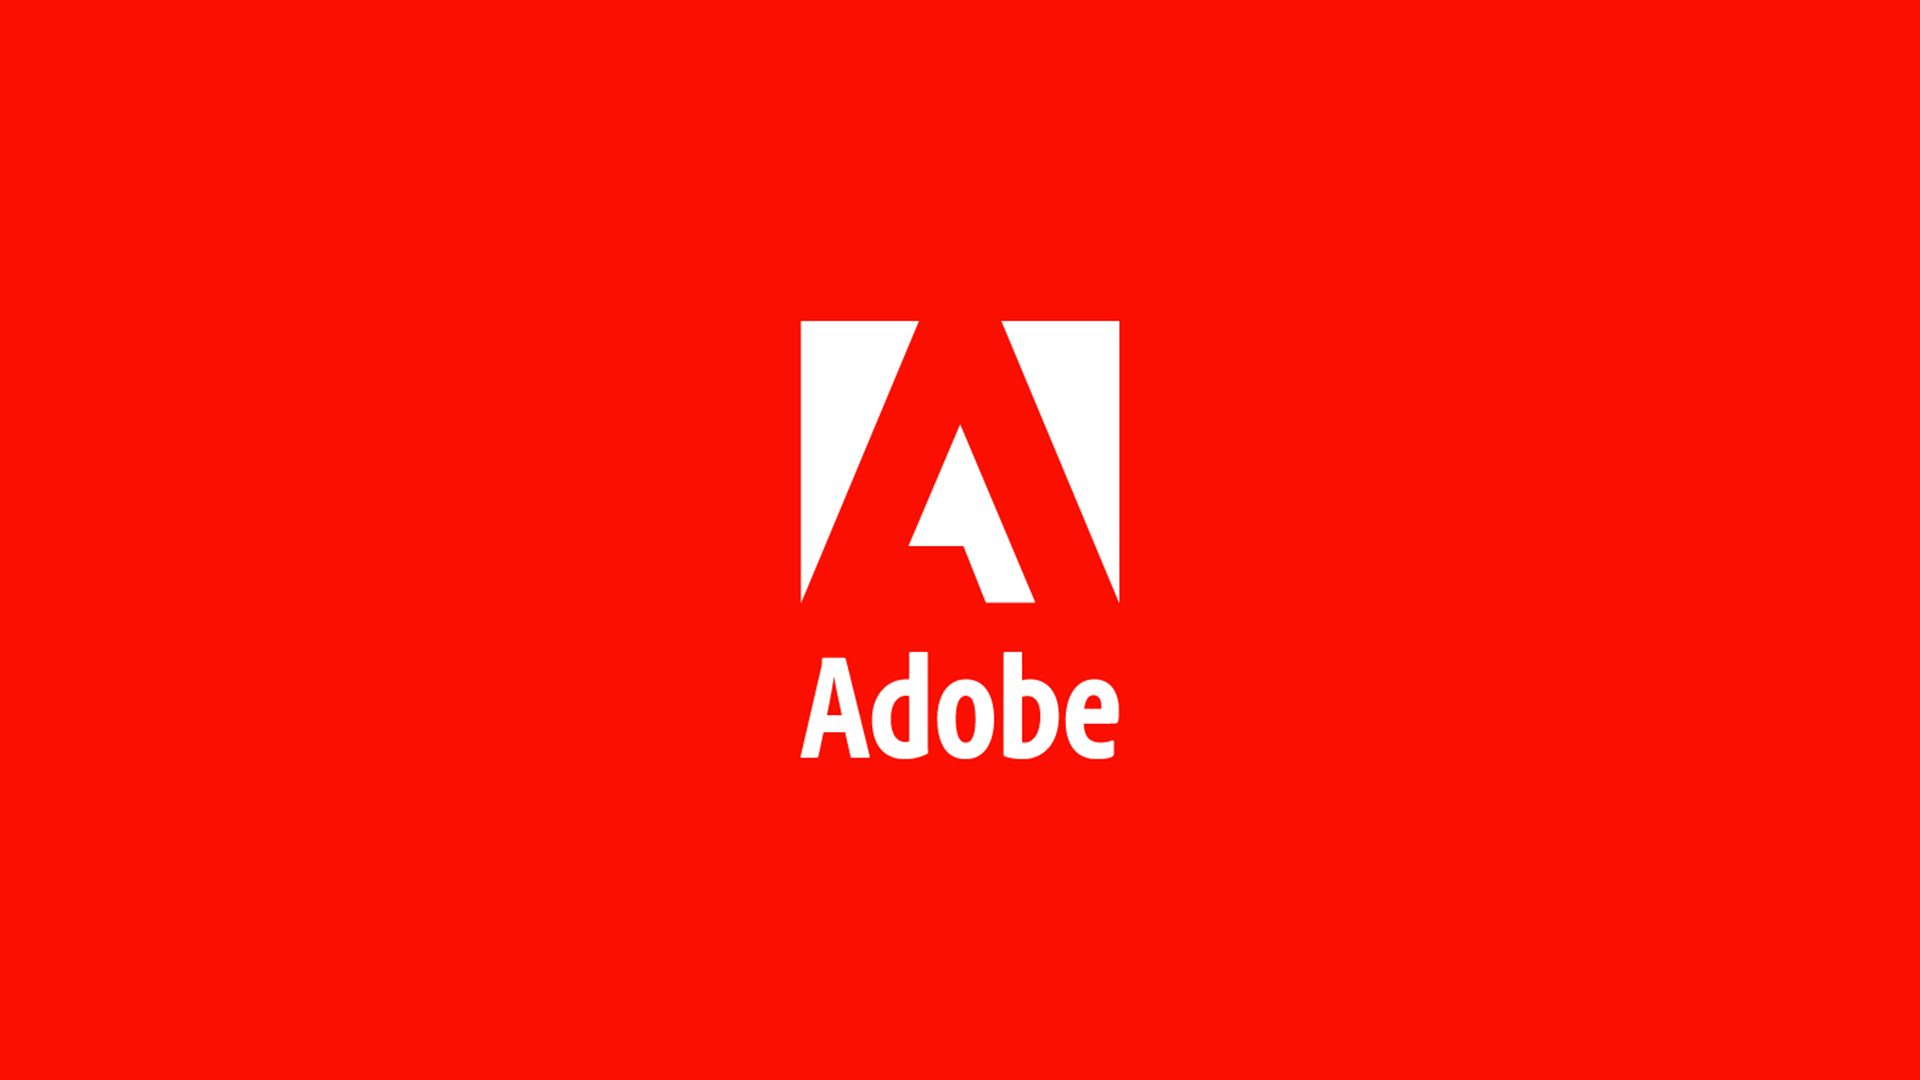 Adobe Logo Minimalism Red Background Simple Background 1920x1080